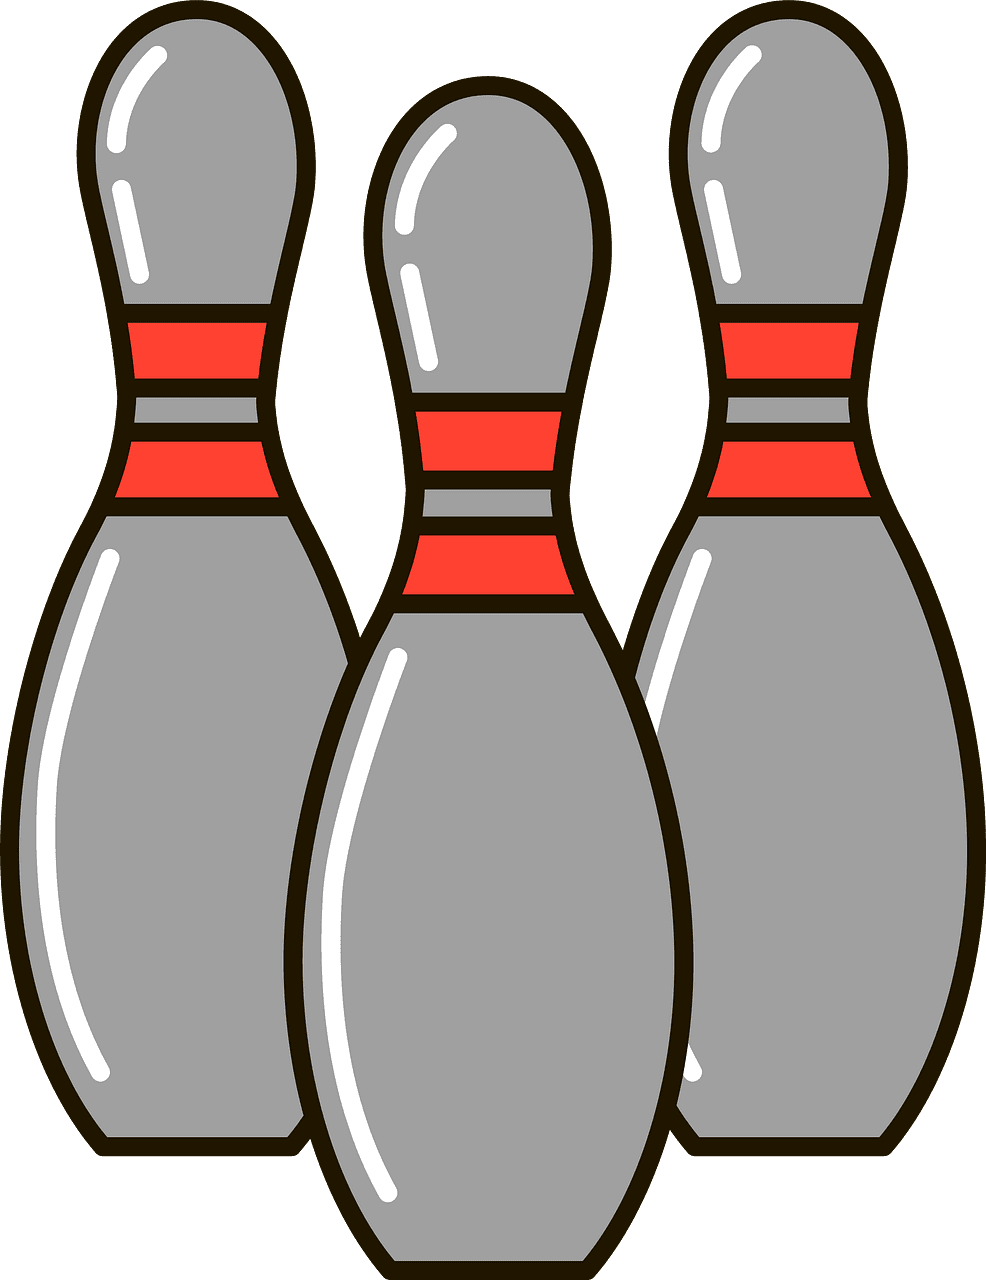 Bowling Pins clipart transparent